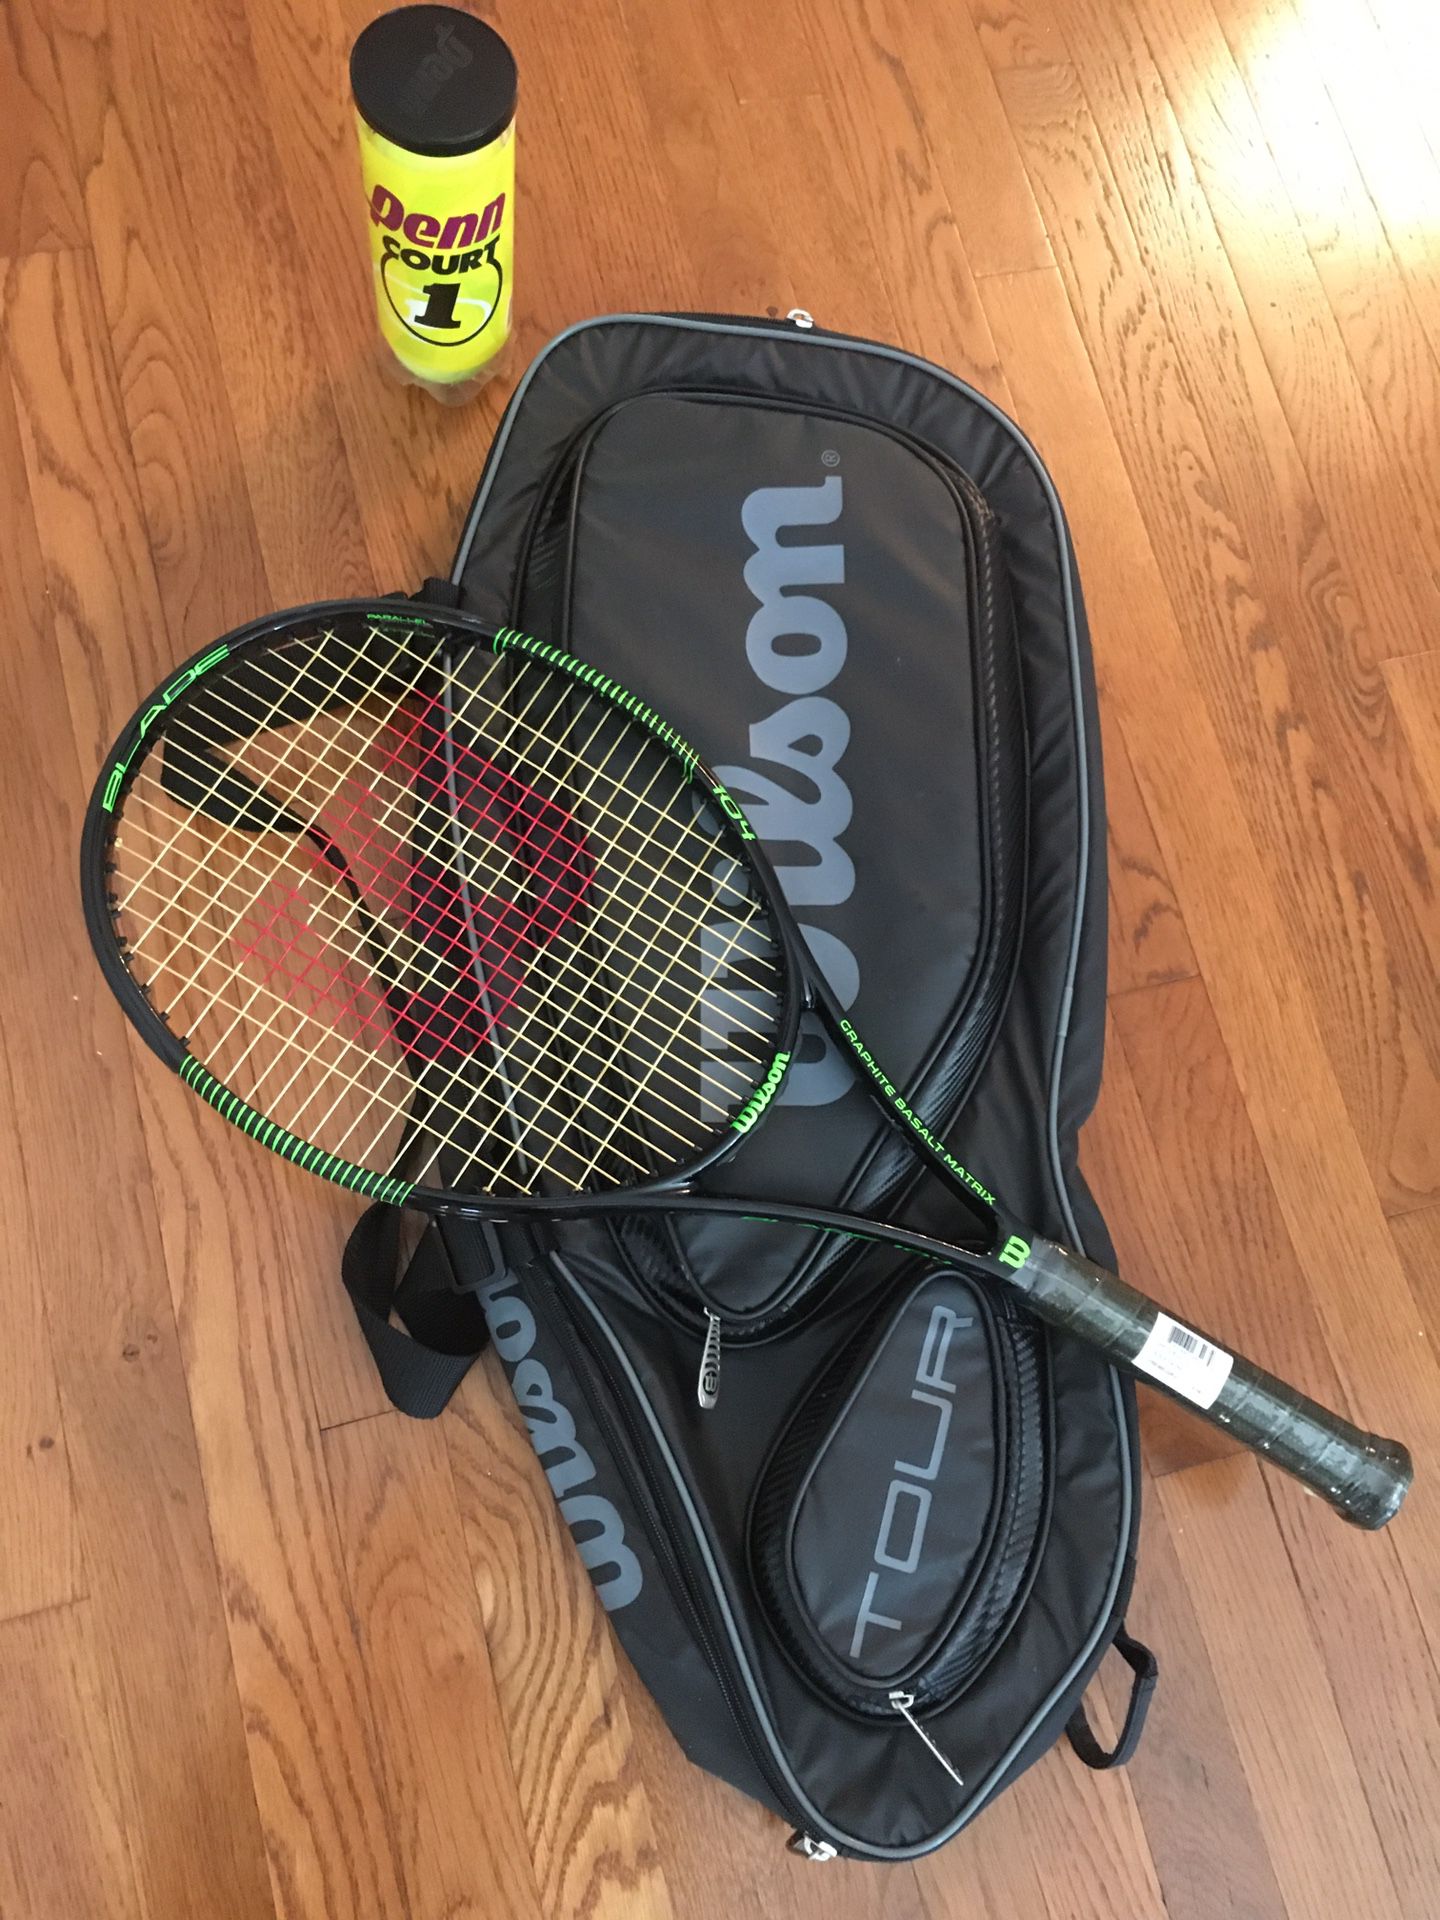 Tennis racket - Wilson (with case)